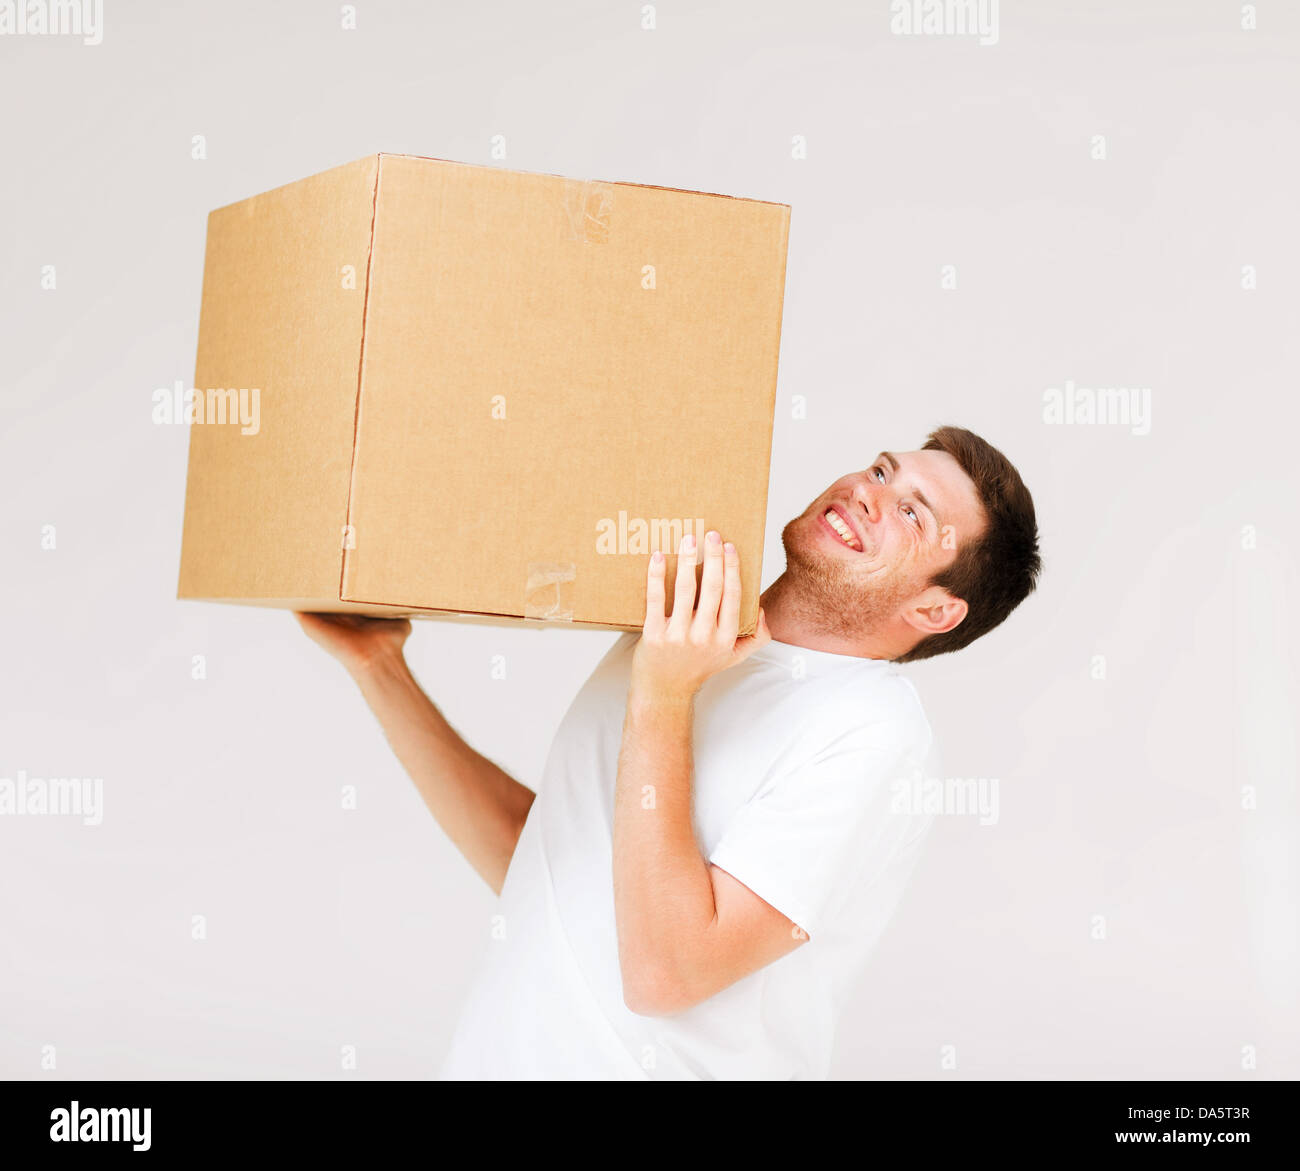 Человек держит тяжелый груз. Человек несет коробку. Коробка в руках. Человек поднимает коробку. Несет тяжелую коробку.